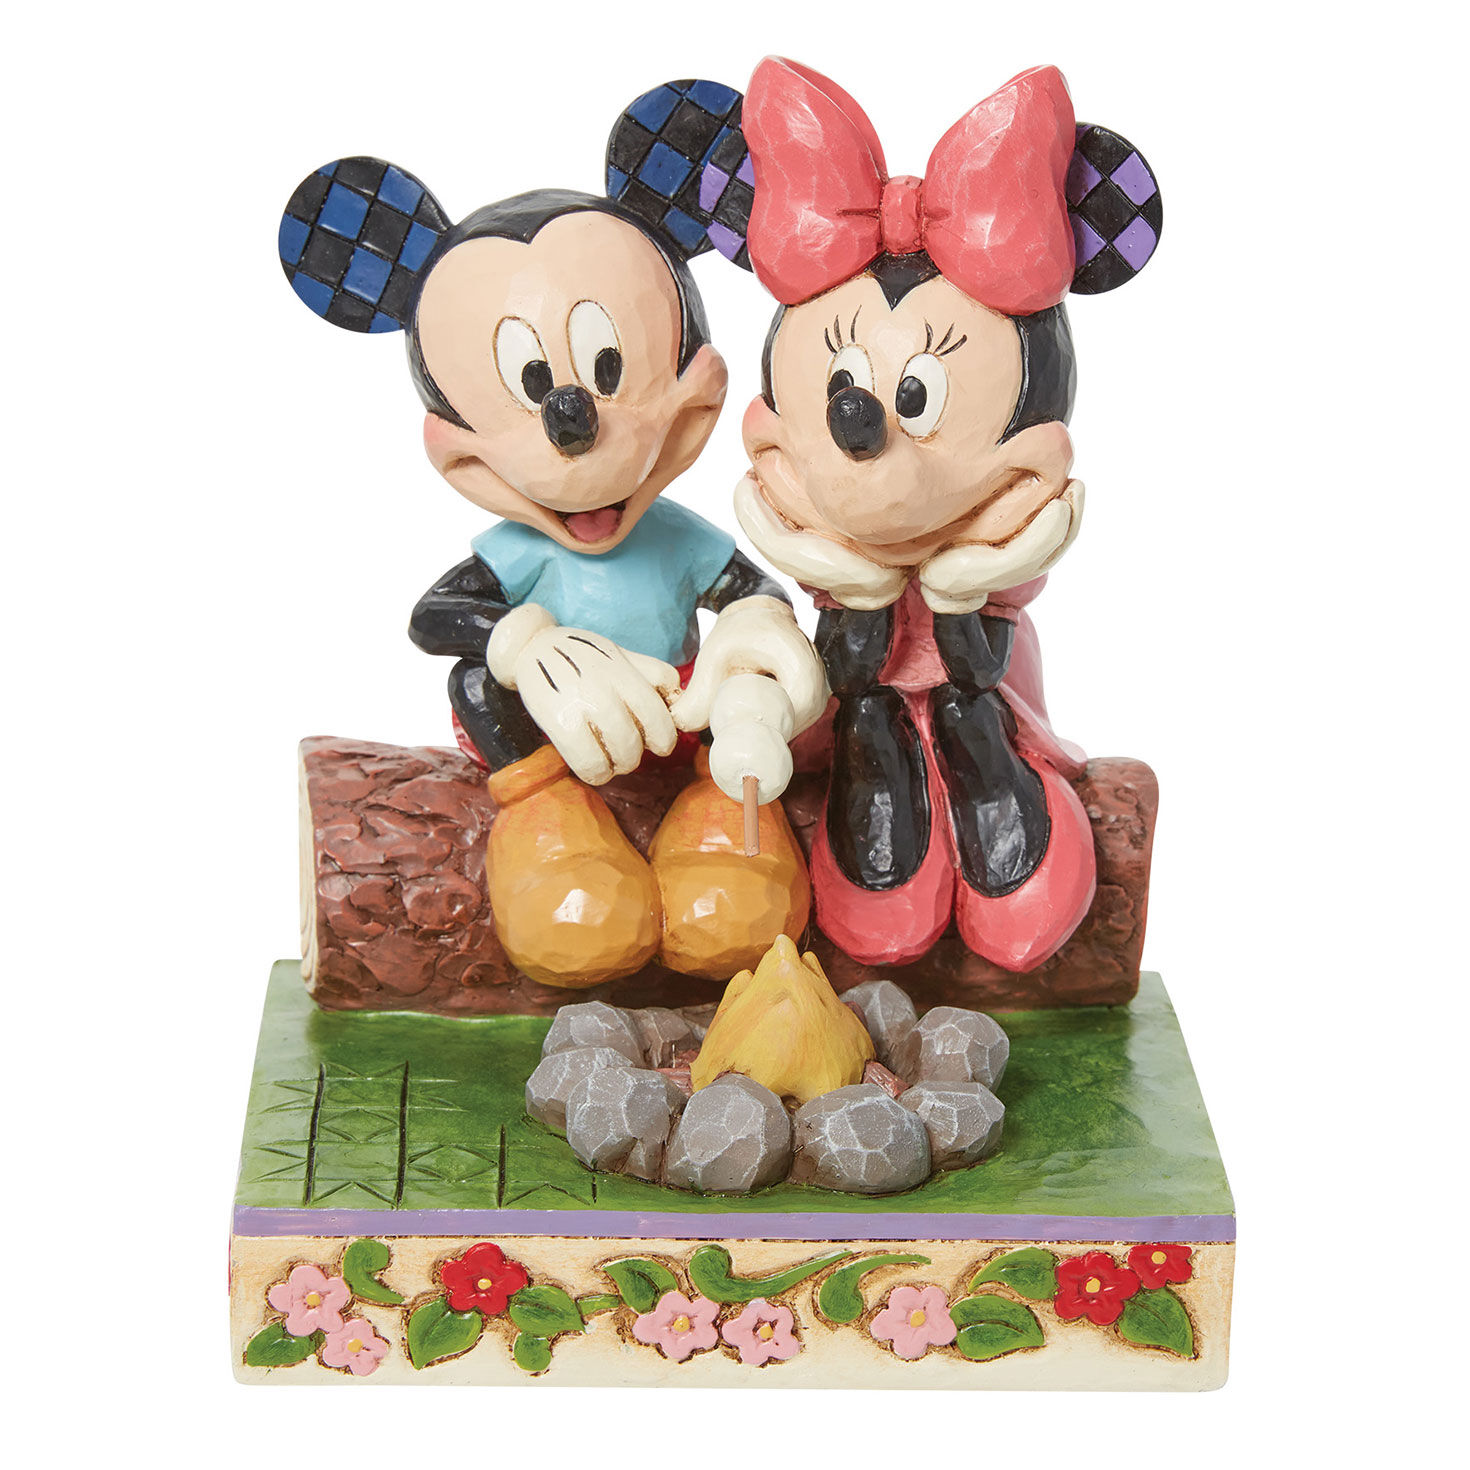 complement Brutal Malawi Jim Shore Disney Mickey and Minnie Campfire Figurine, 5.75" - Figurines -  Hallmark